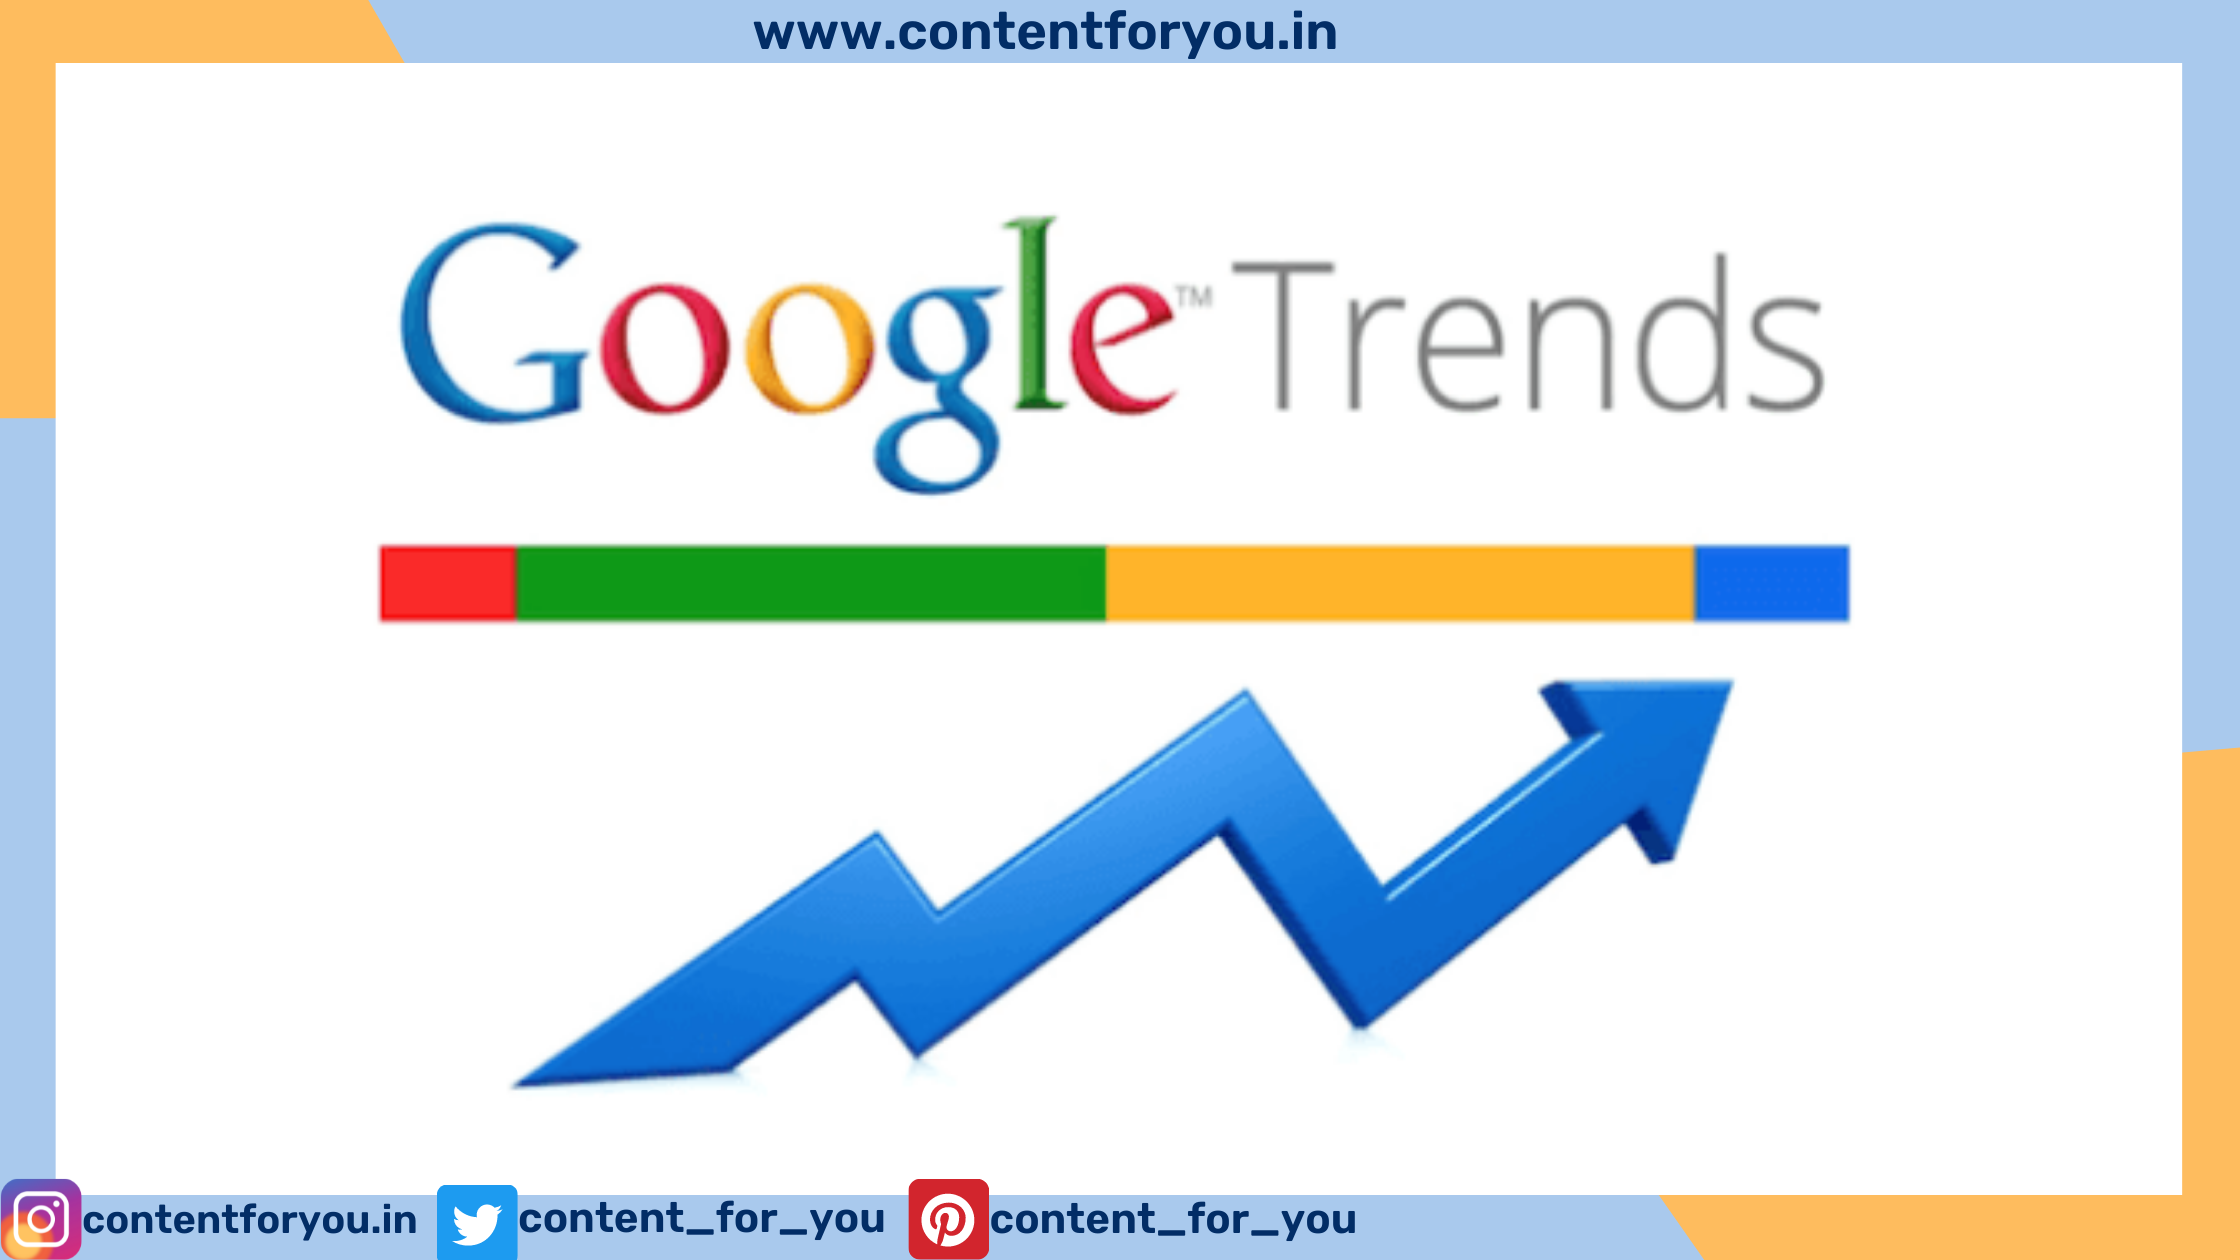 Google Trends in Marketing